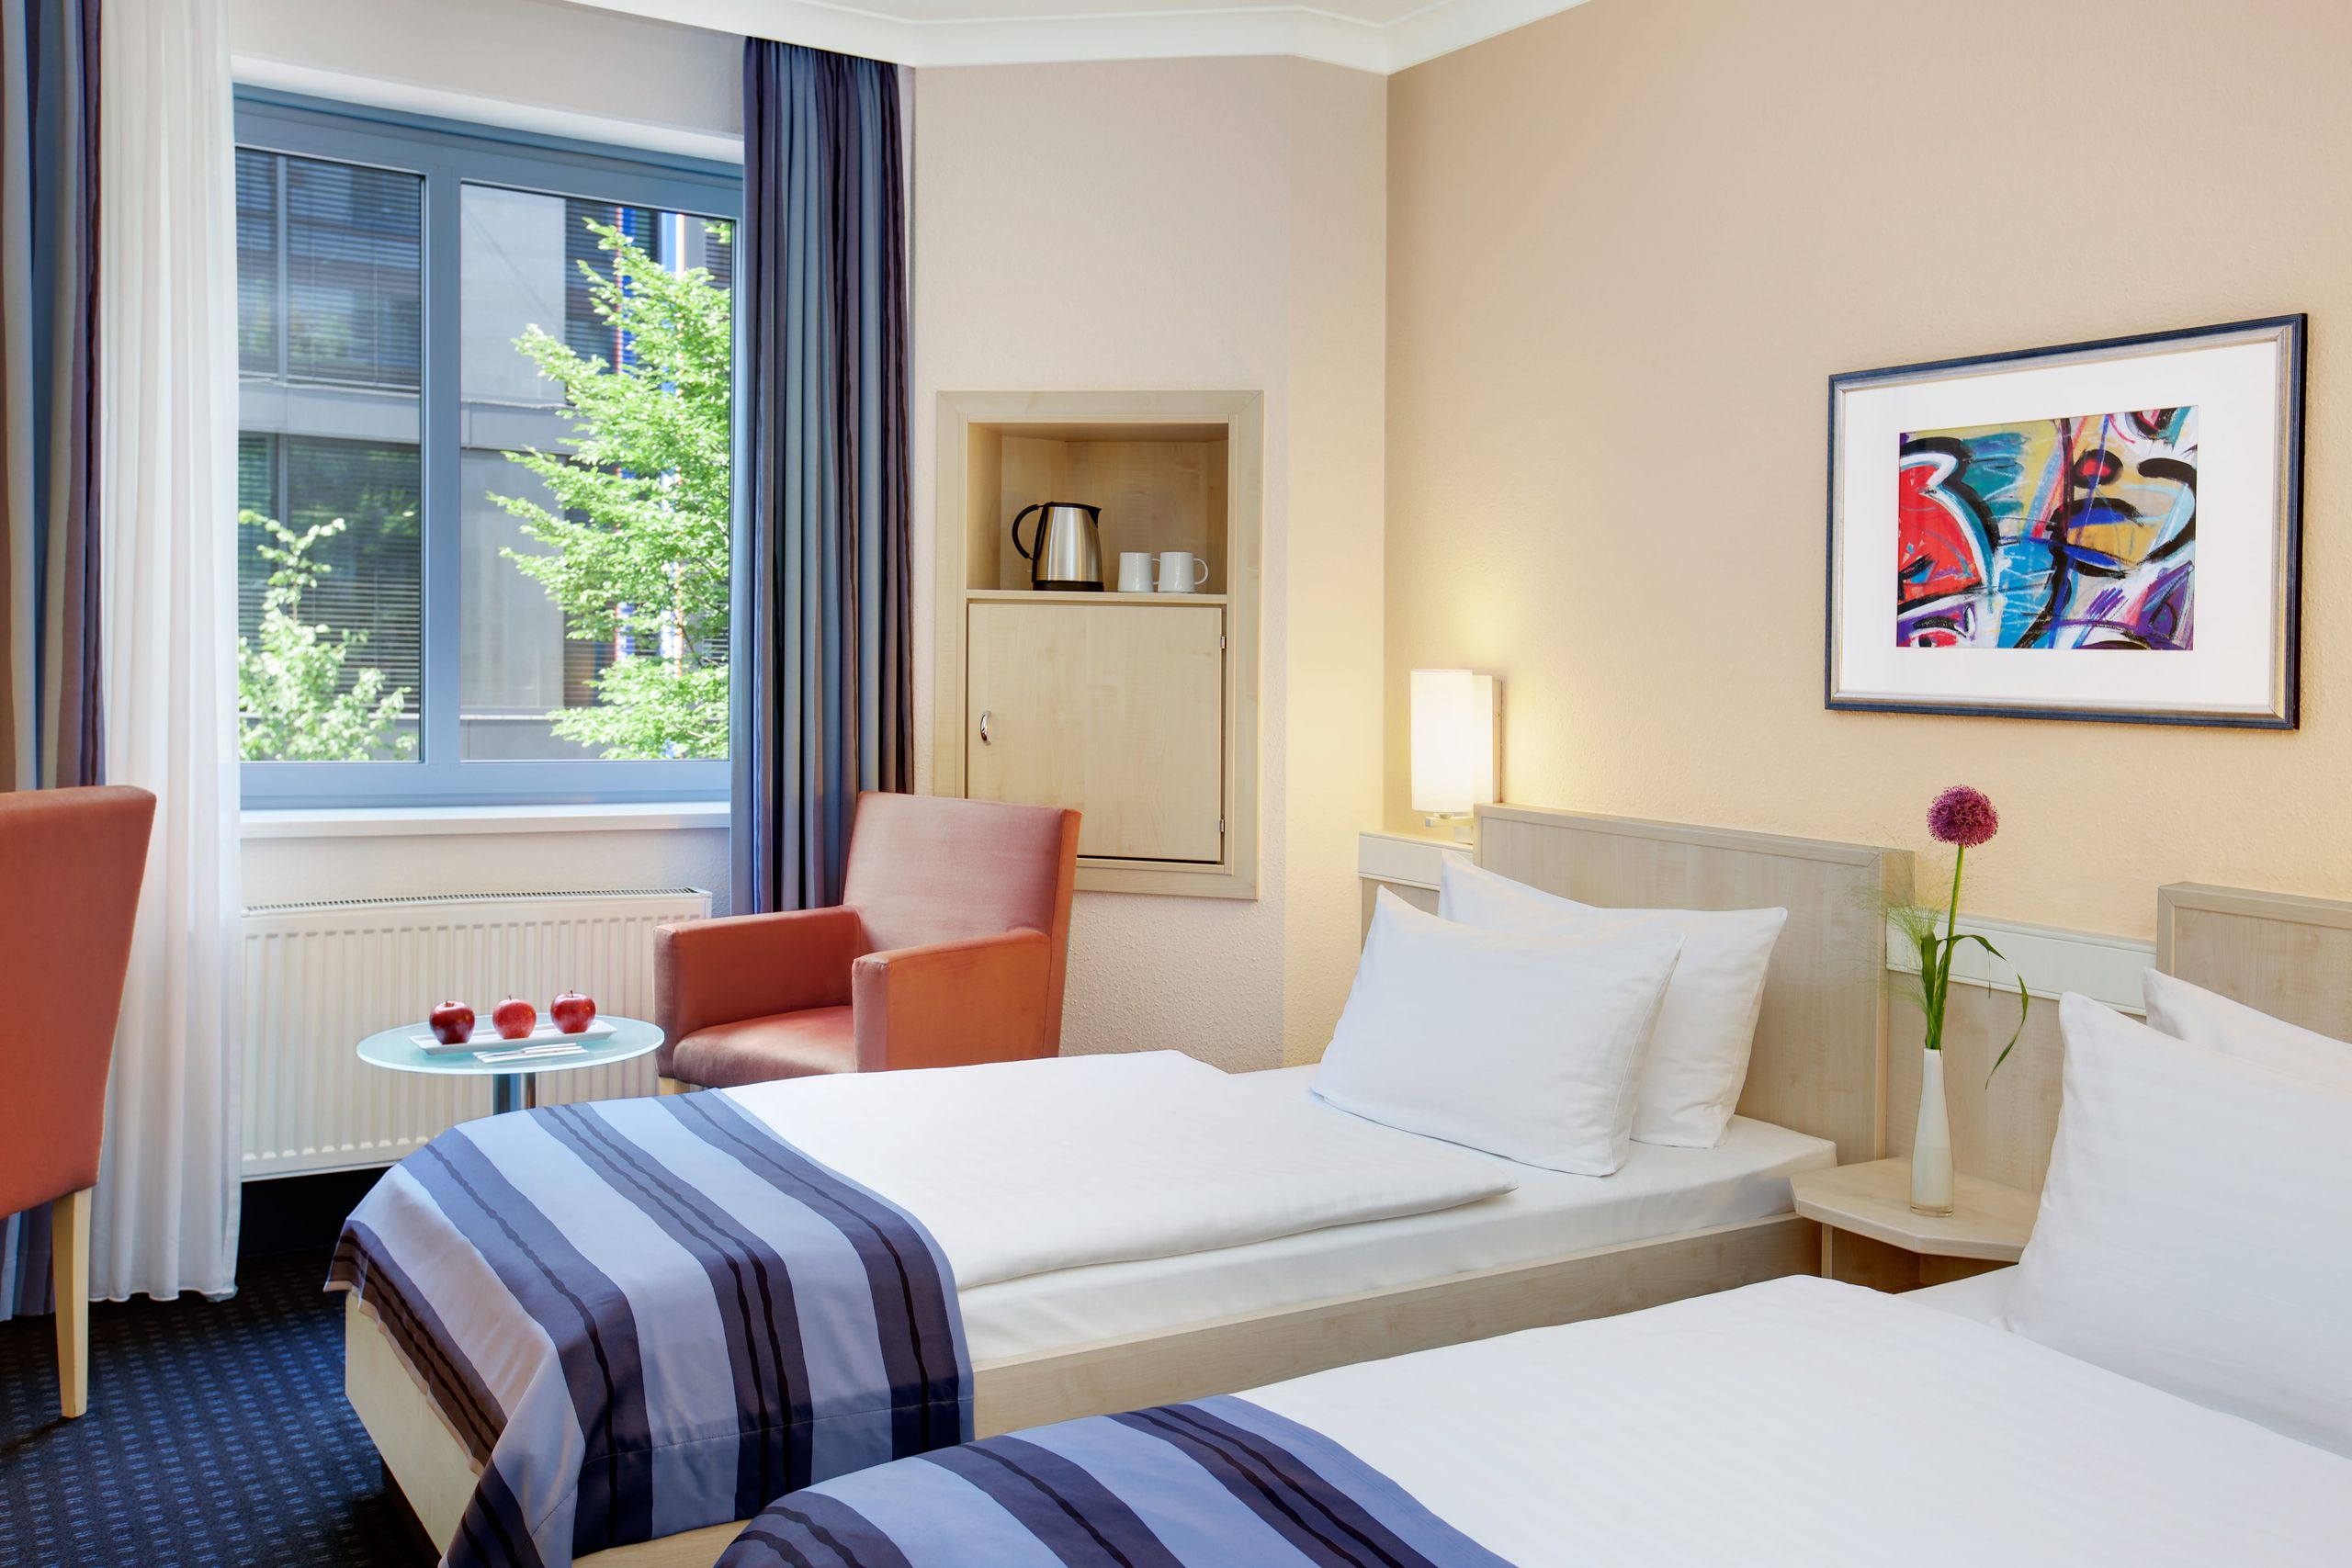 IntercityHotel Nuremberg – Business Room, twin beds